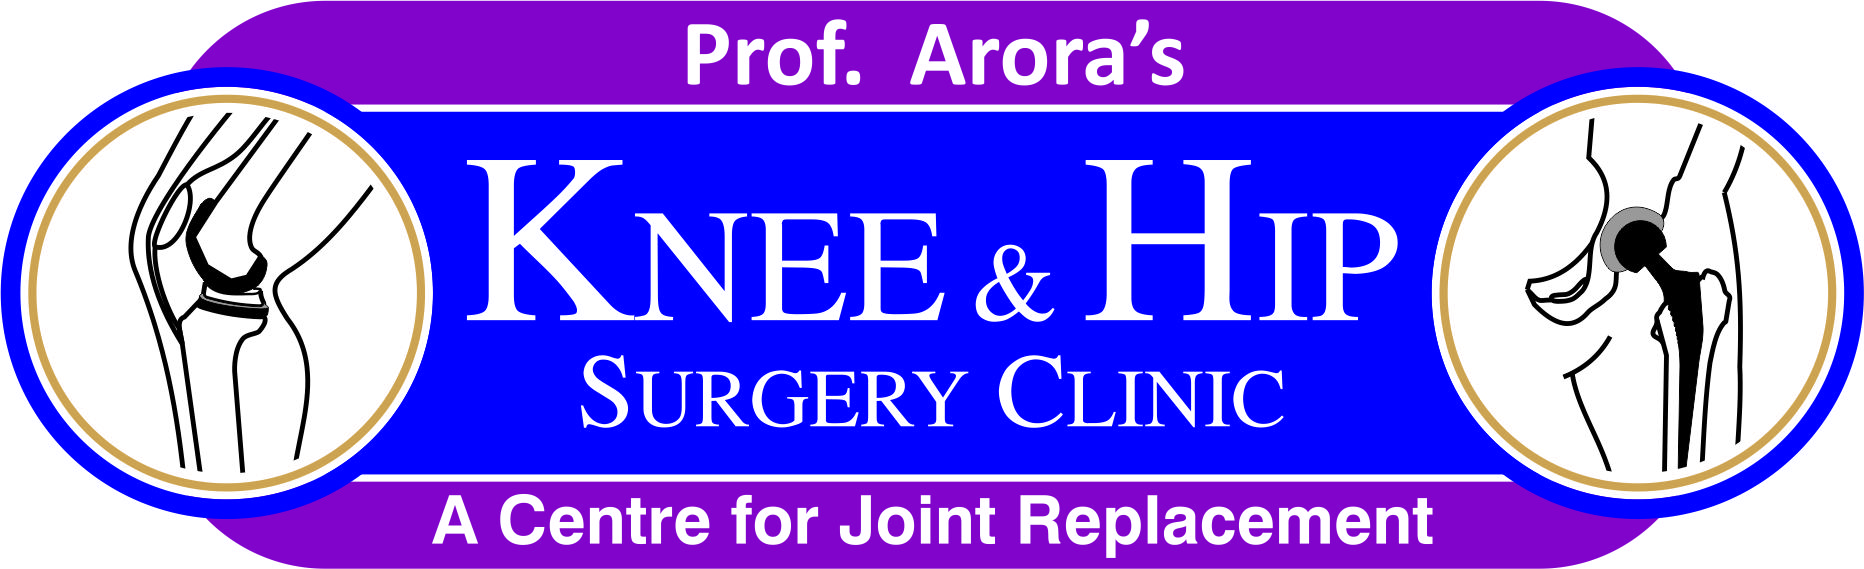 Knee & Hip Surgery Clinic Logo